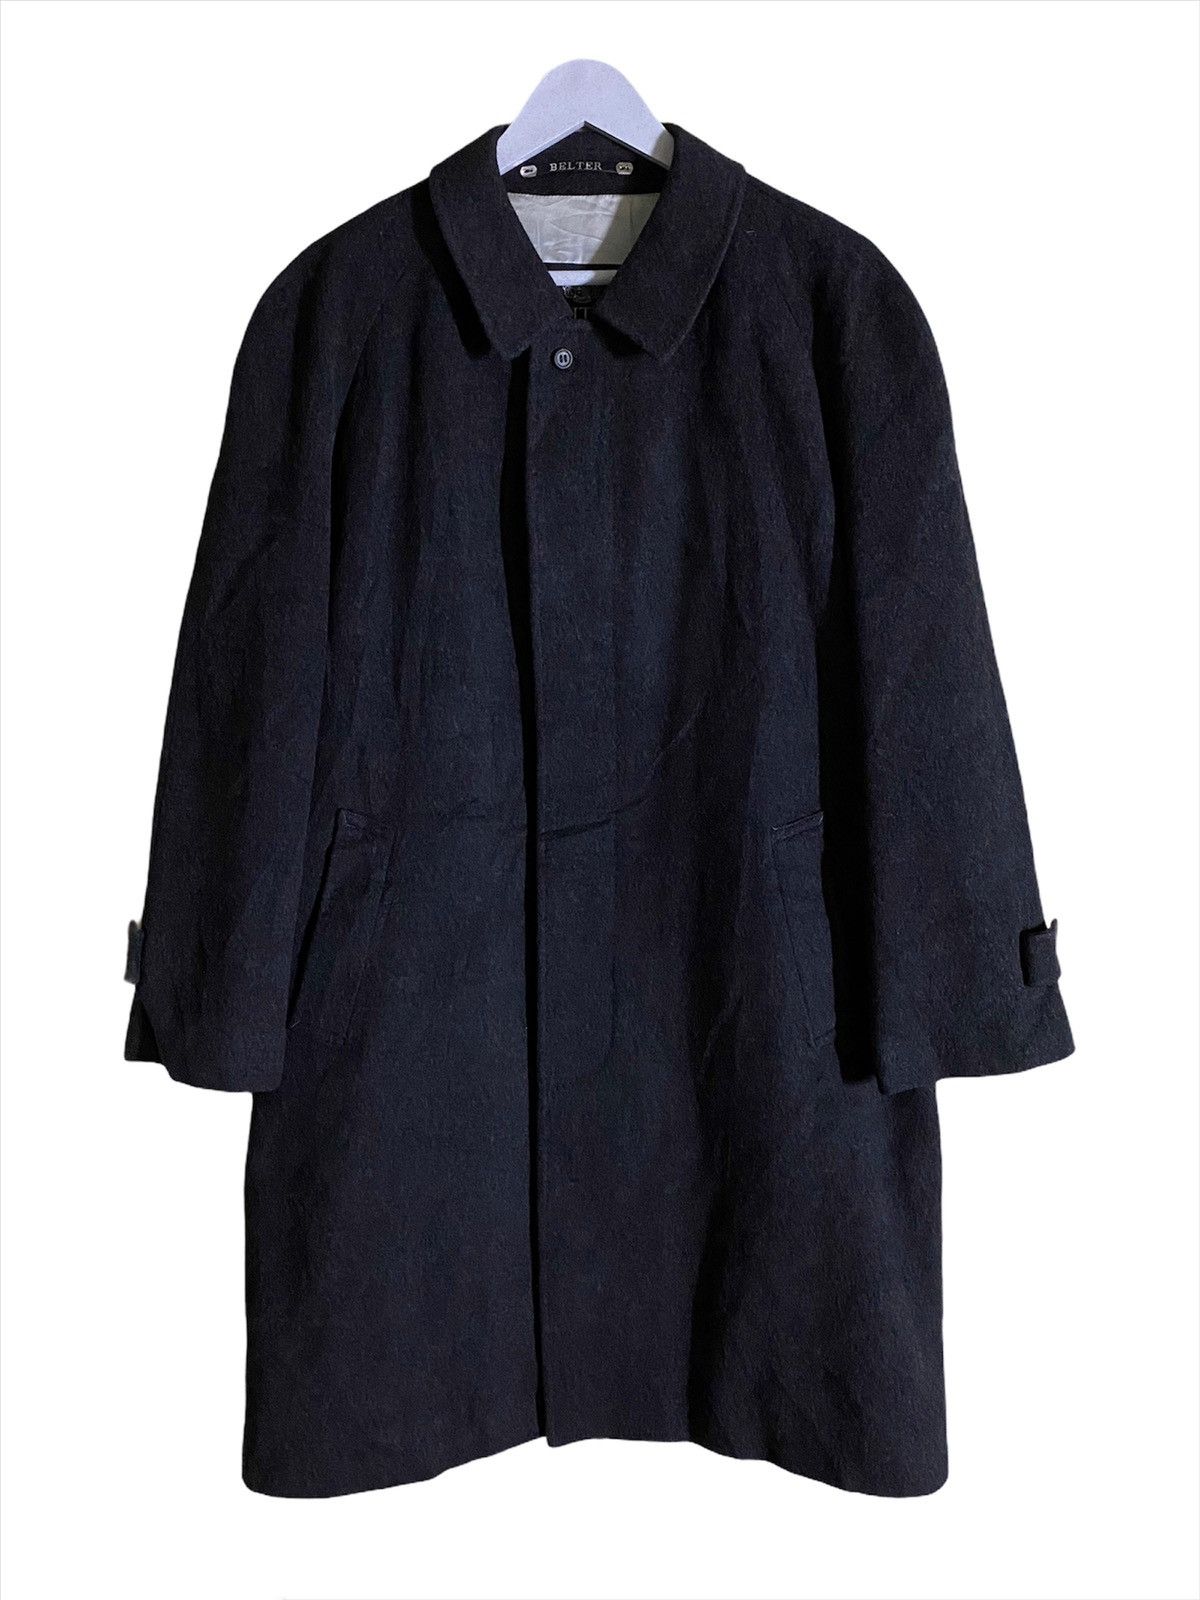 Japanese Brand Belter japan heavy coat longcoat parkas | Grailed